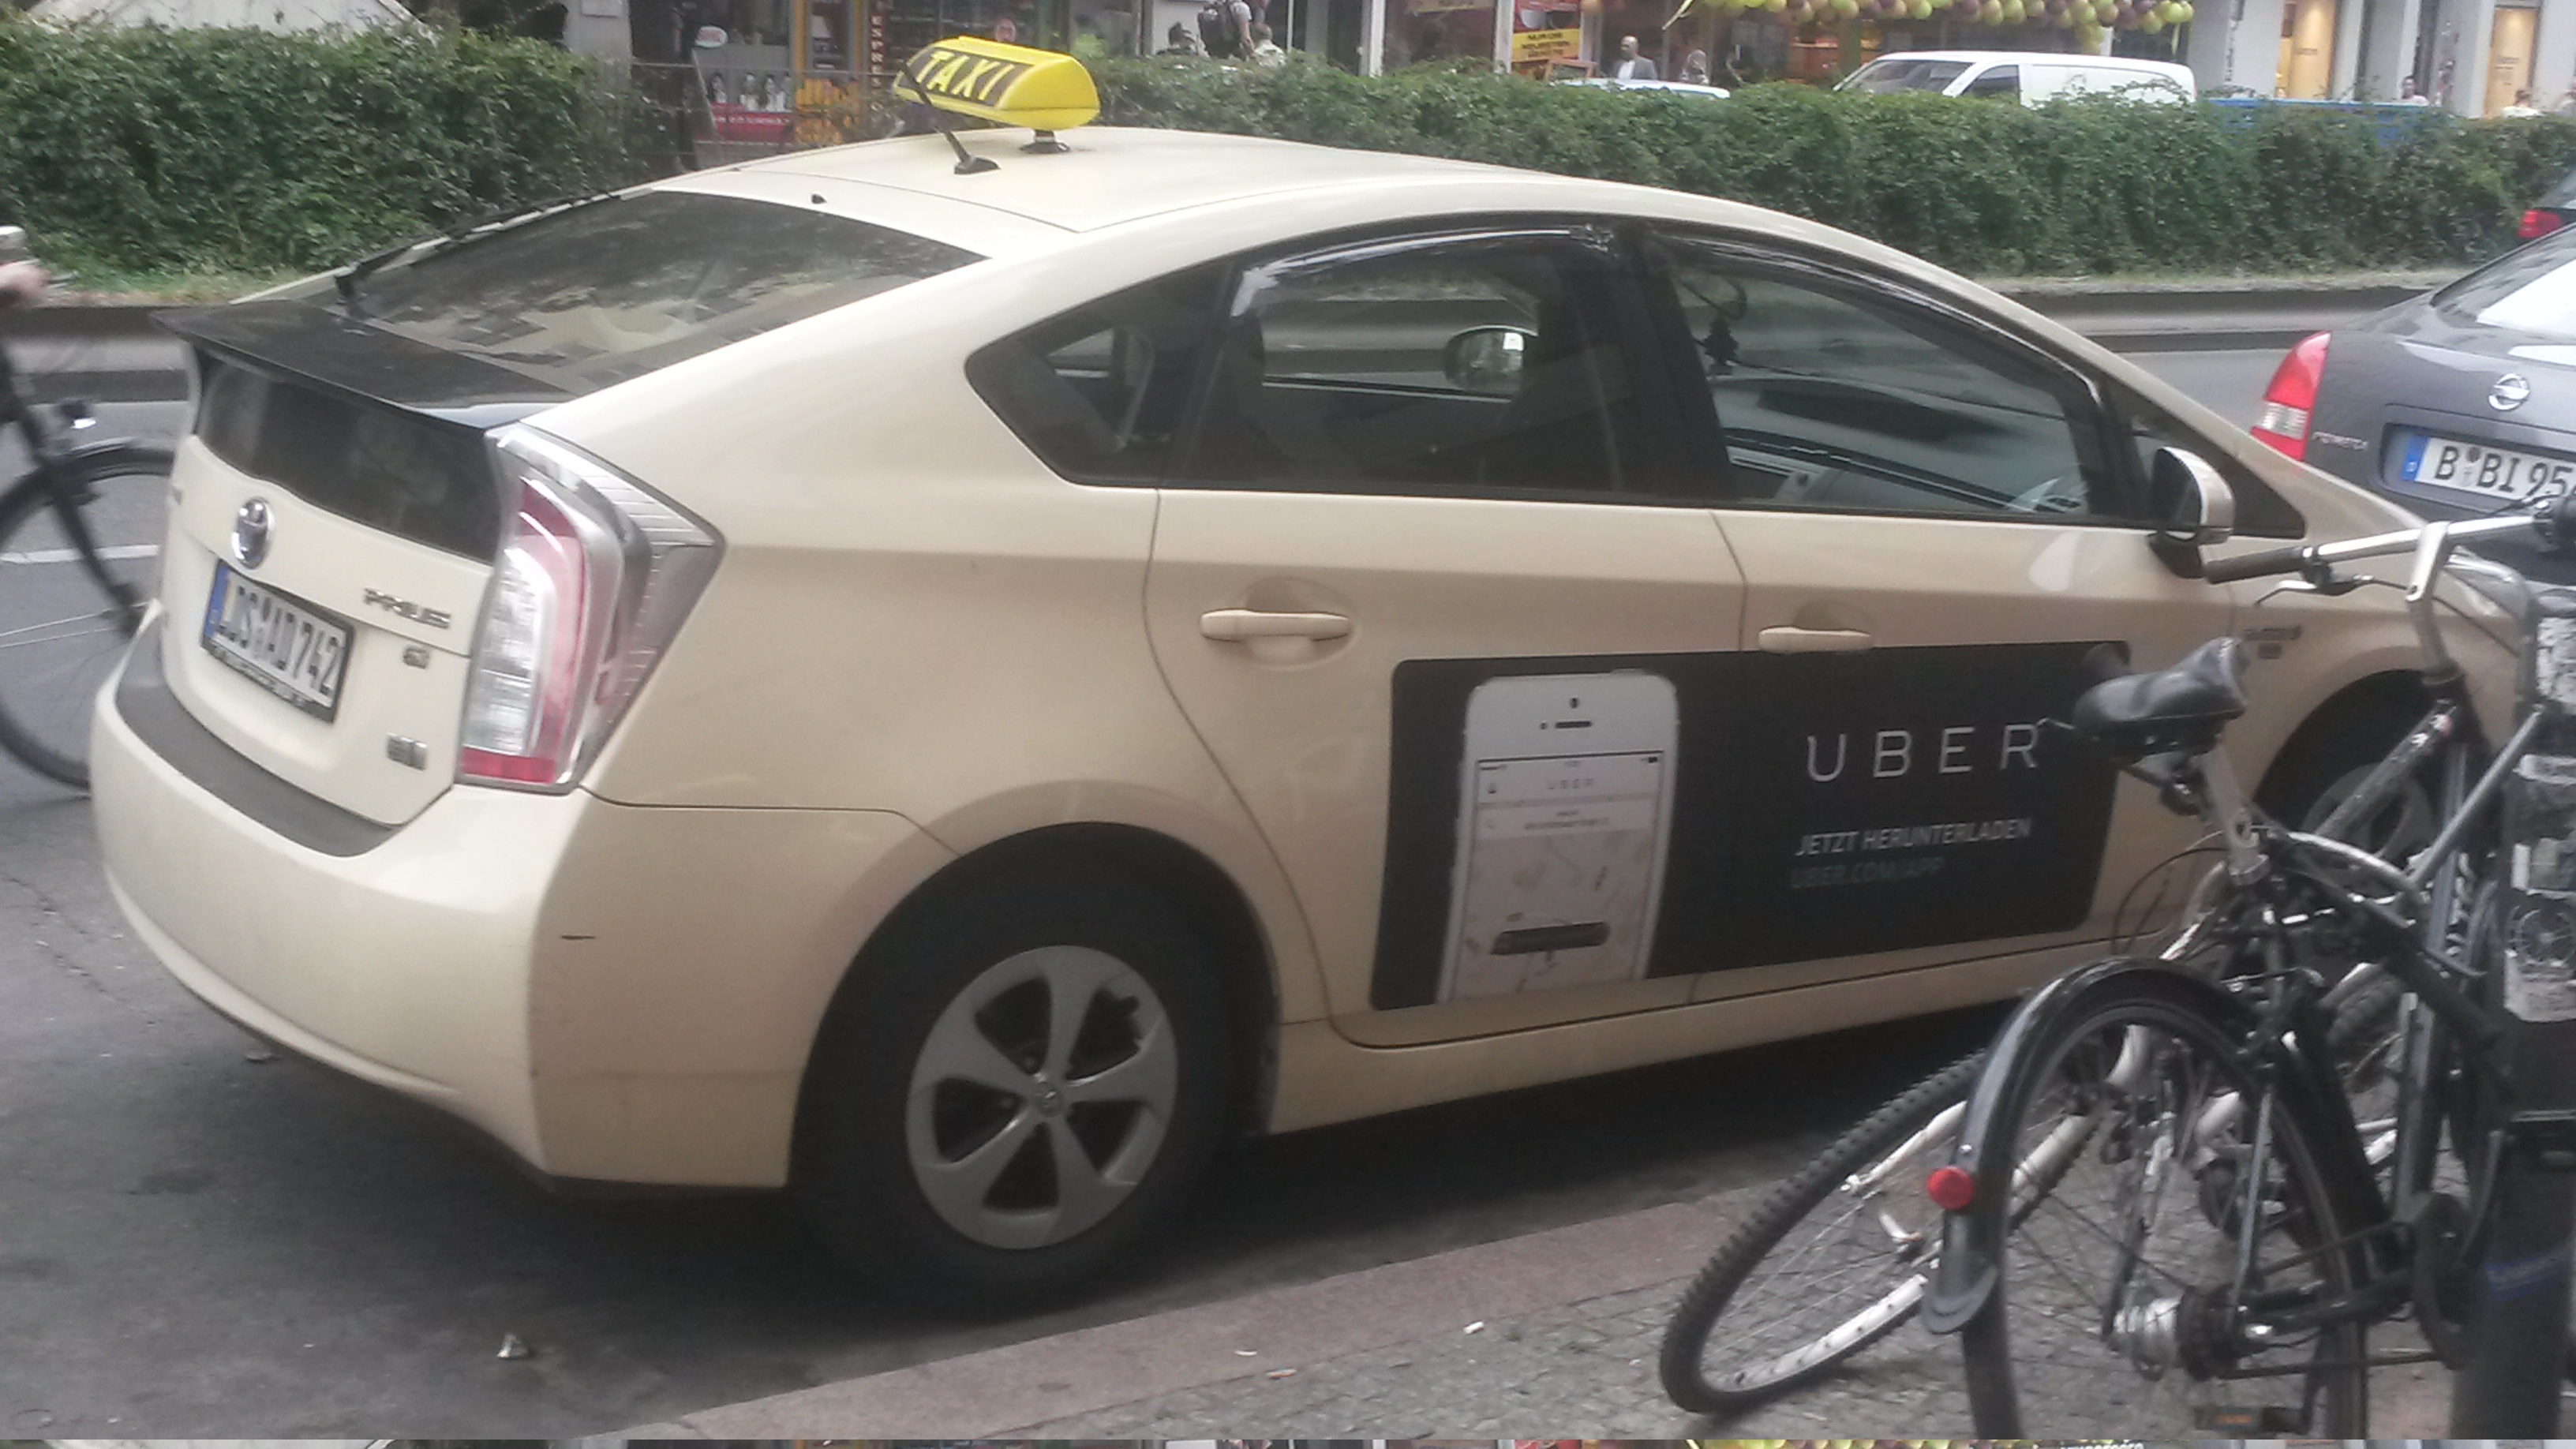 Uber-Taxi-Berlin.jpg